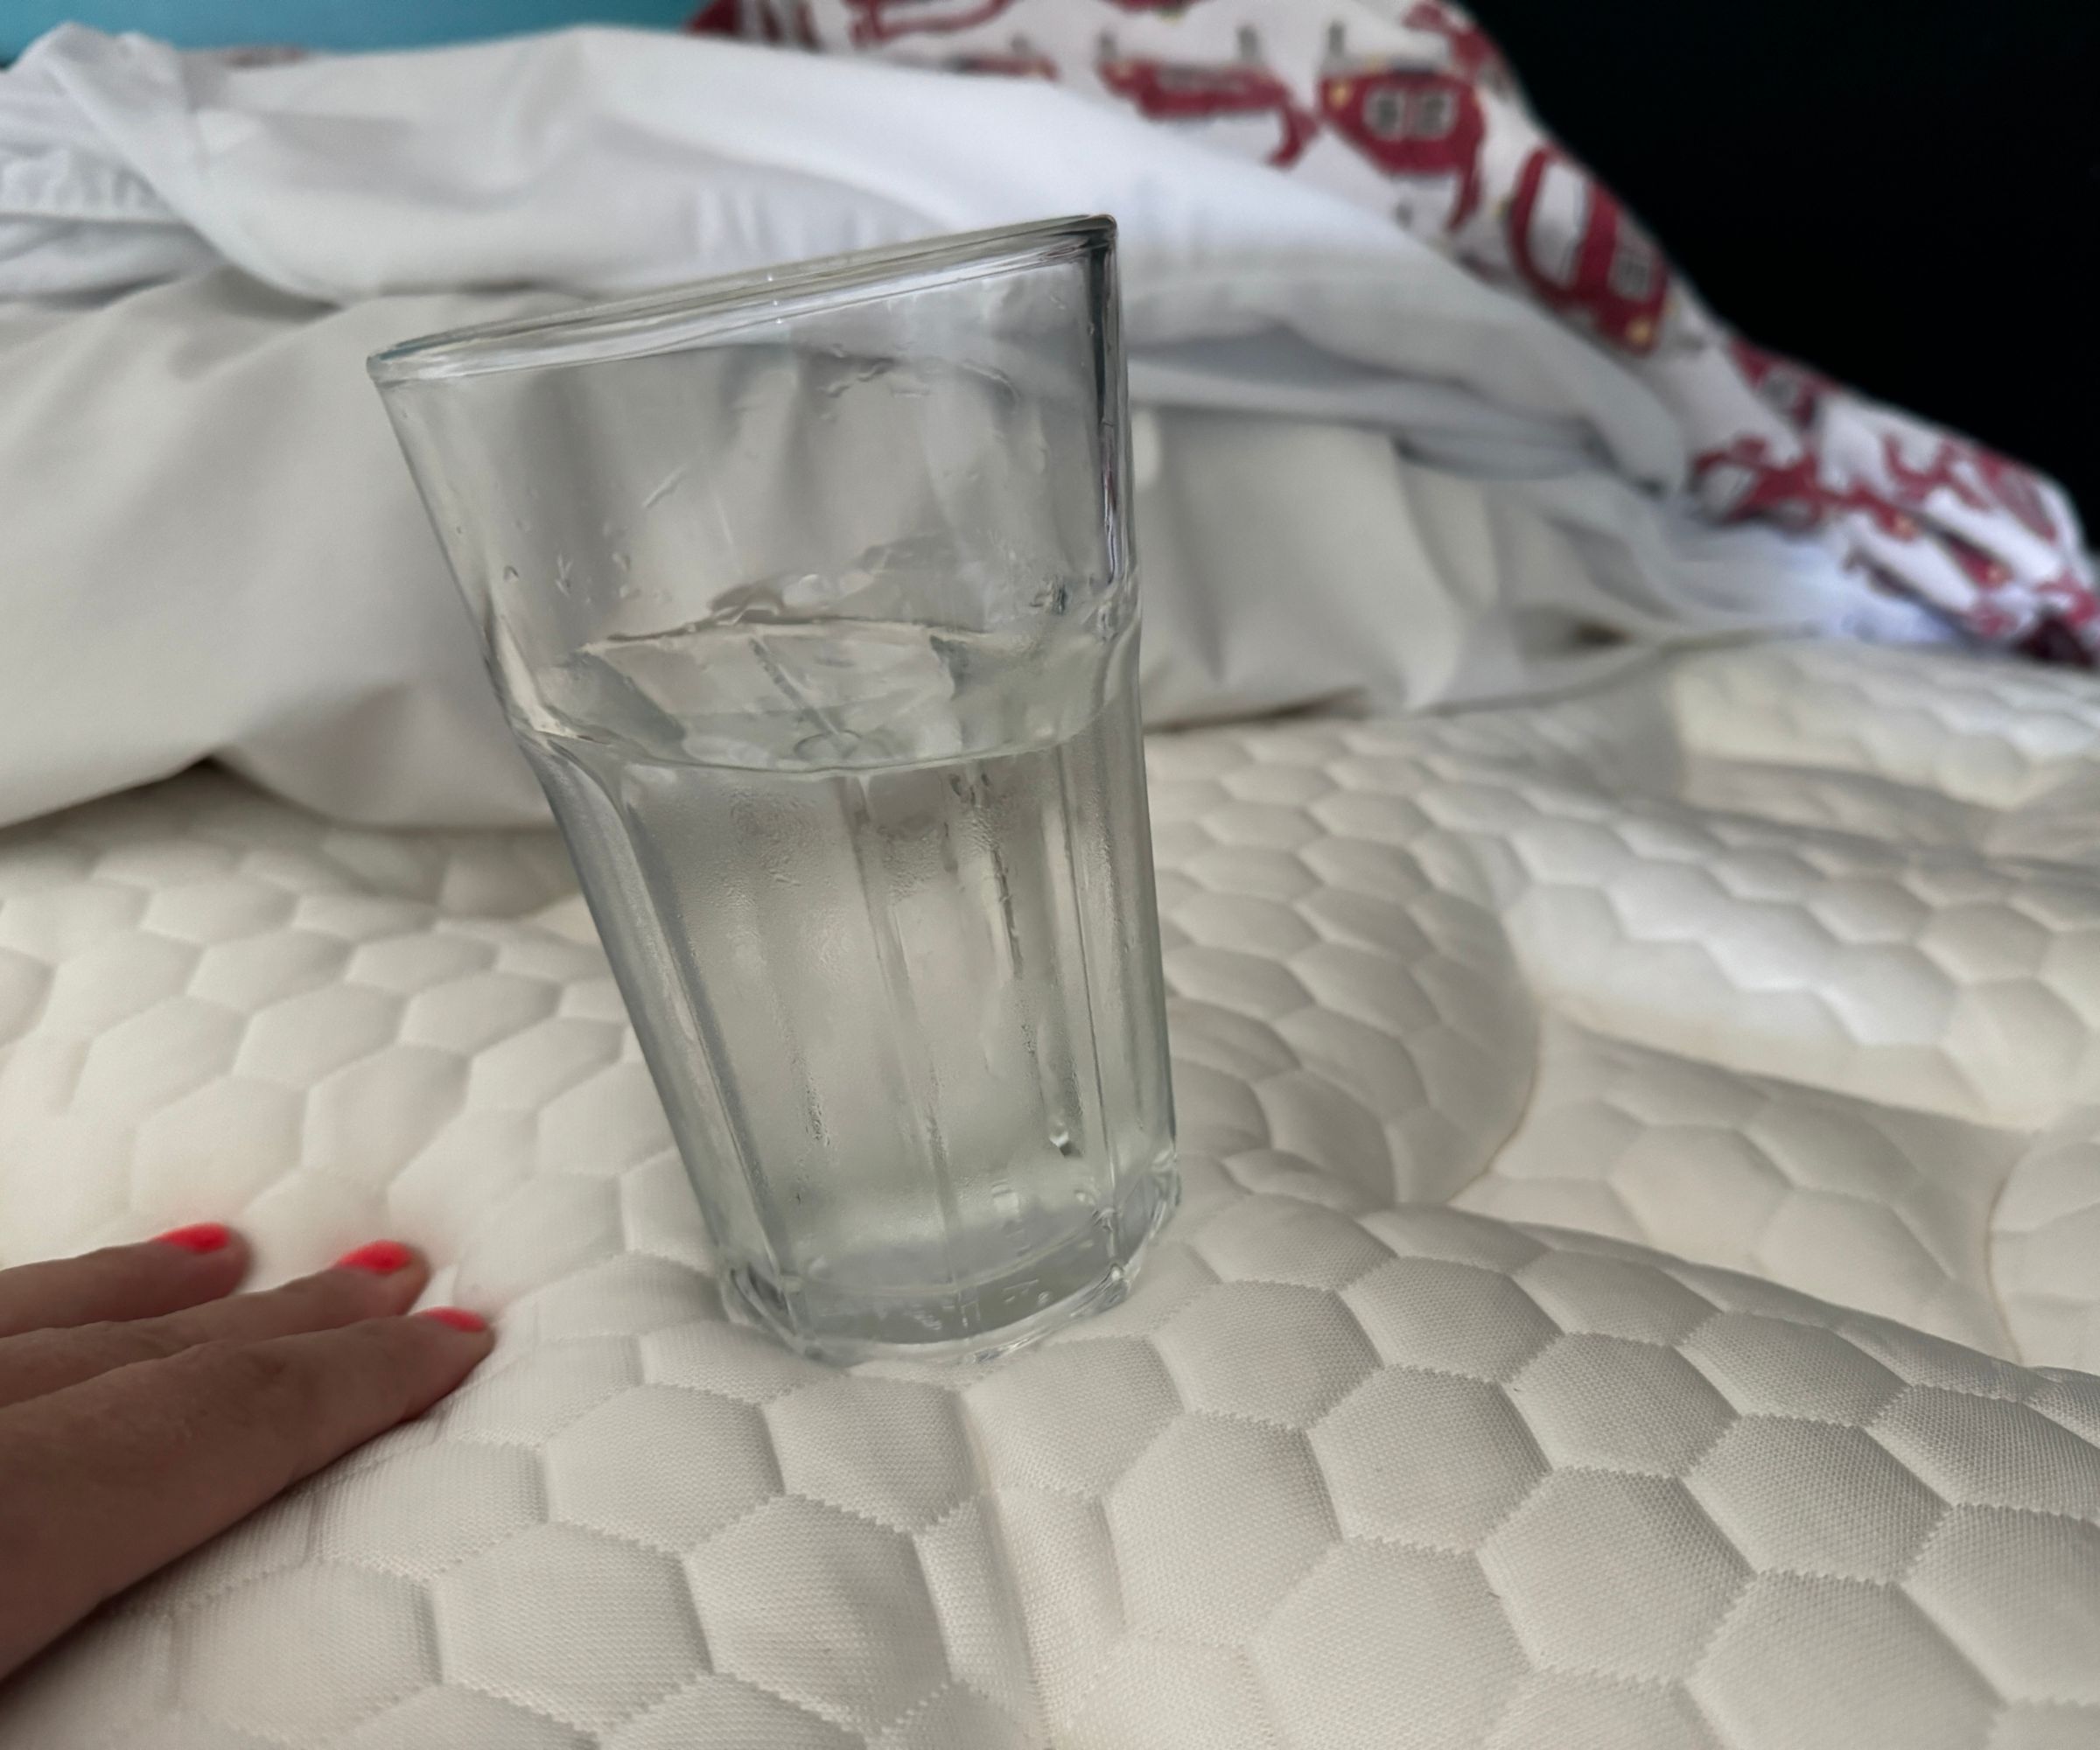 A glass of water balanced on the Helix Dusk Mattress.